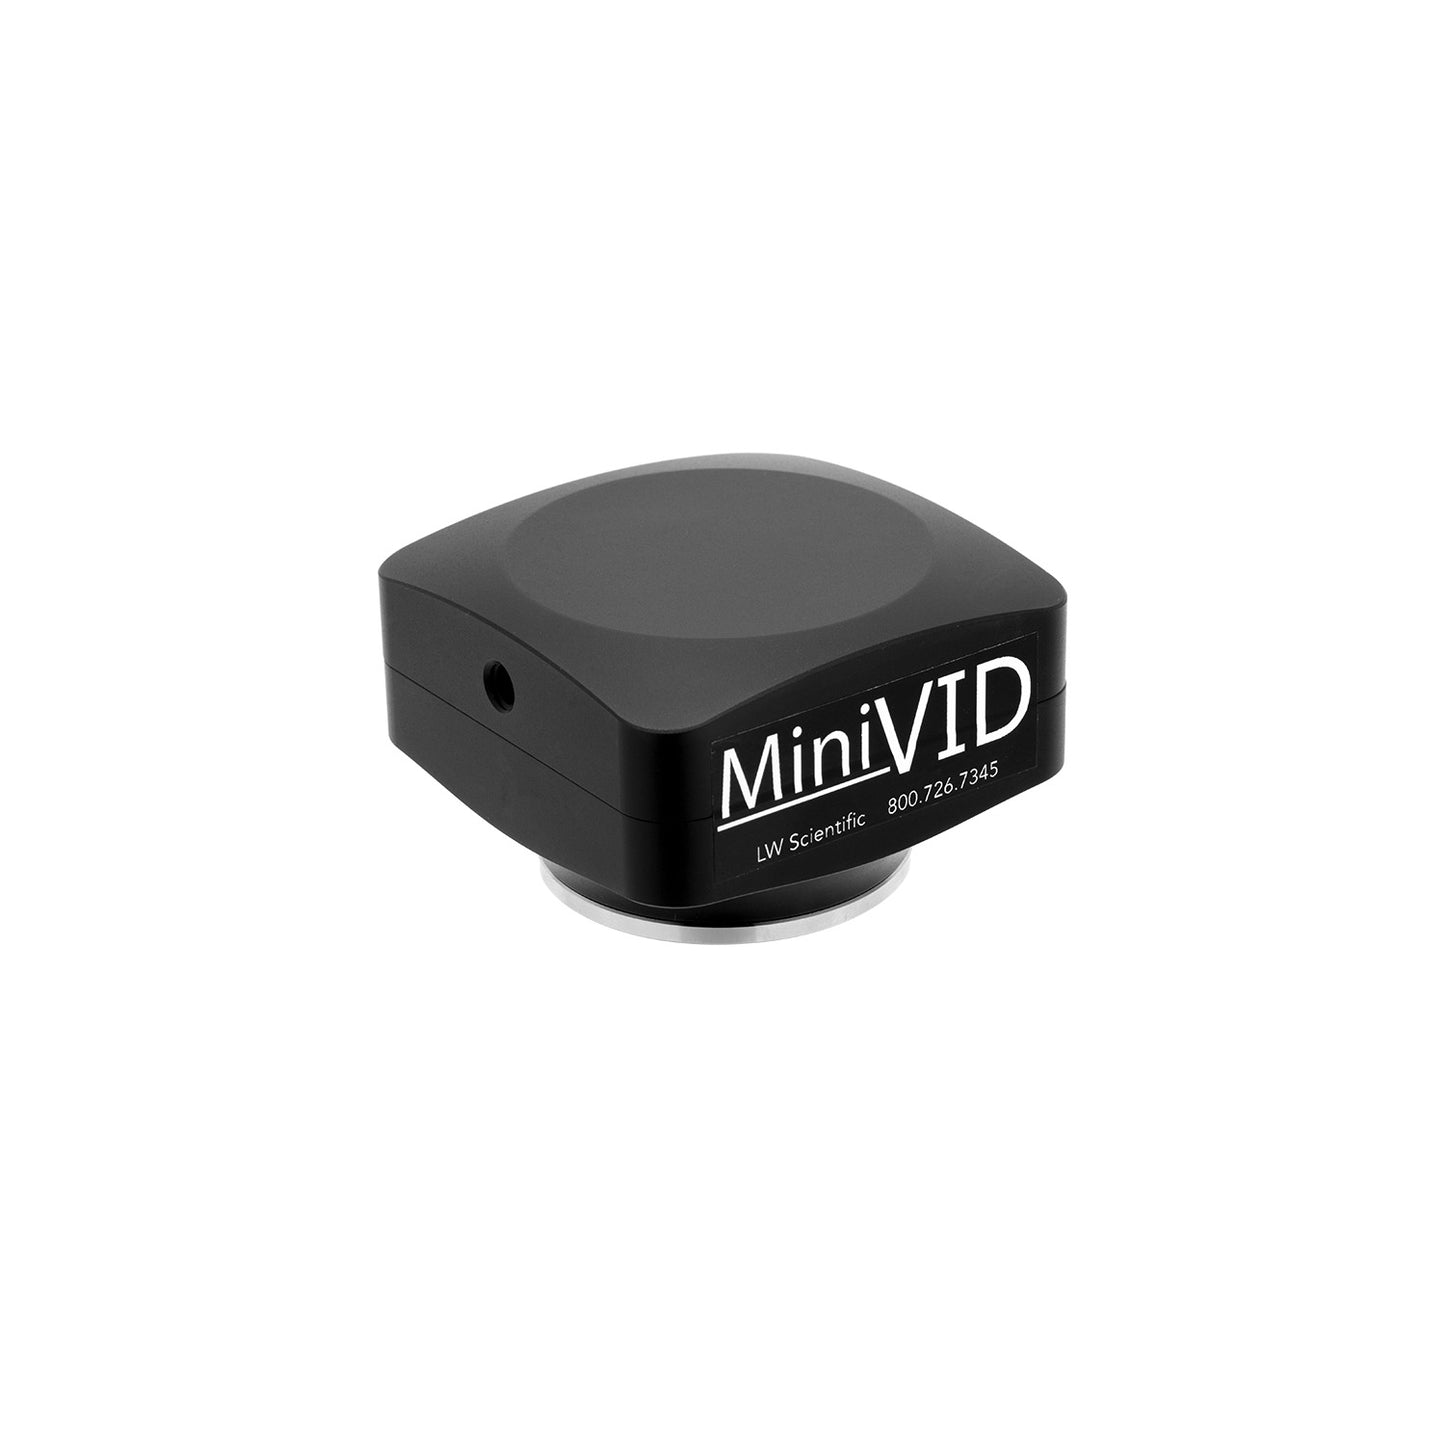 MiniVID camera